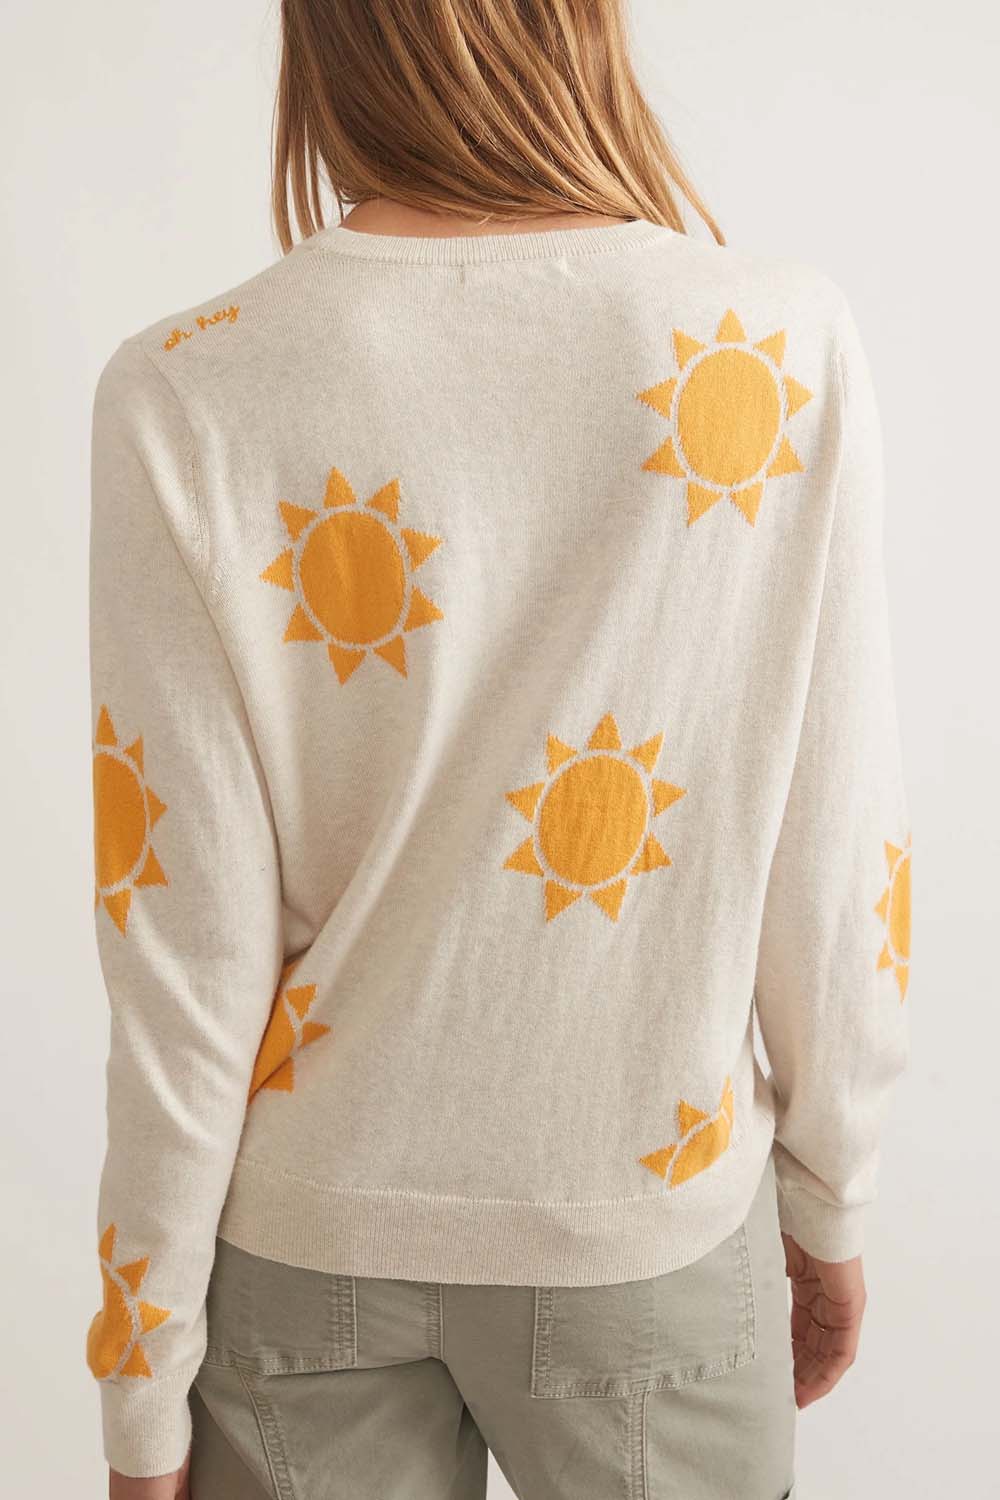 Marine Layer - Icon Sweater - Sun Print - Back